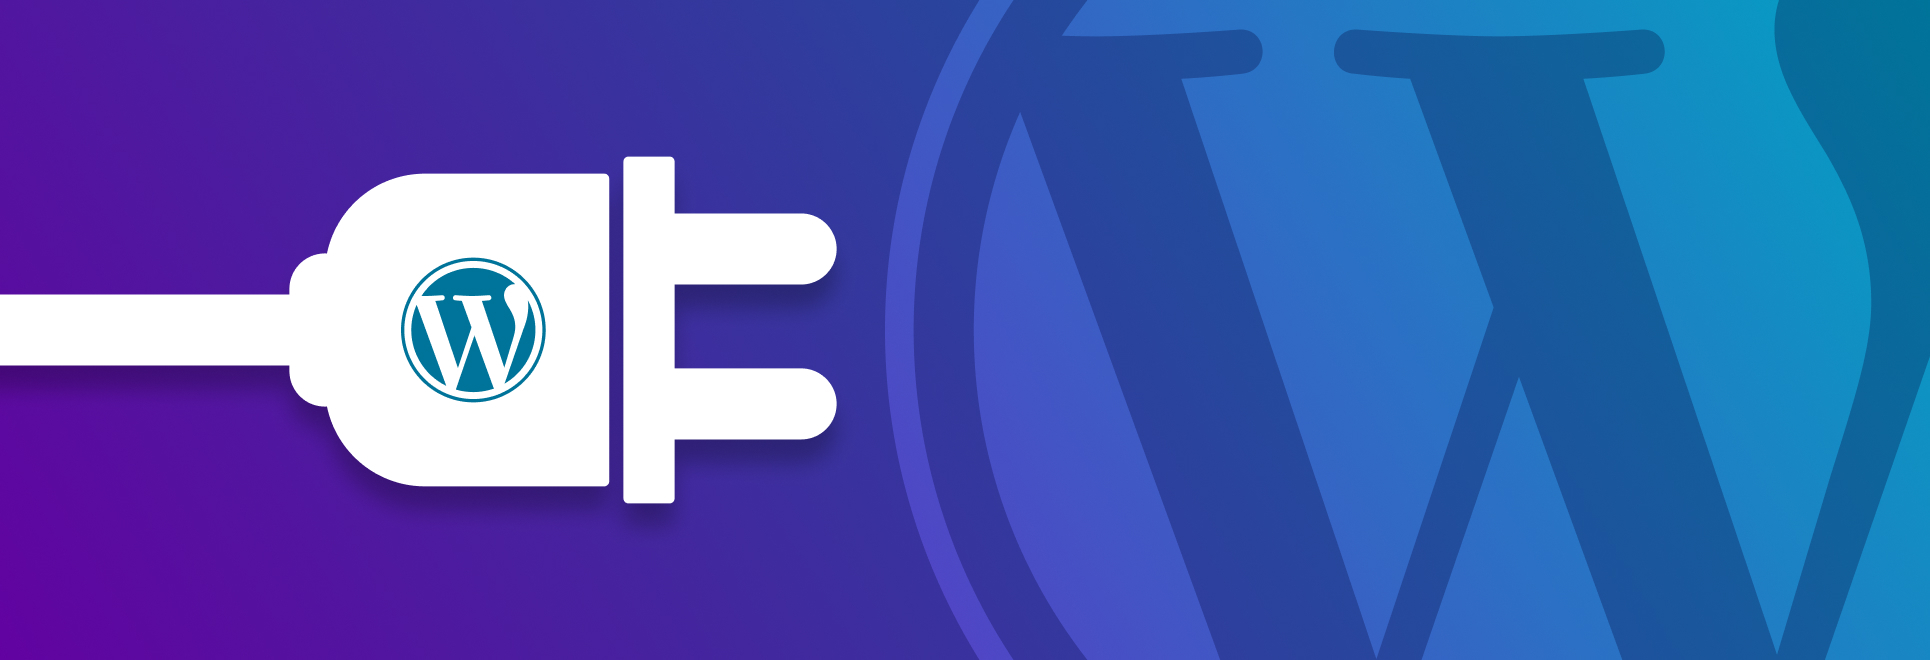 Plugins Every WordPress Web Design Needs